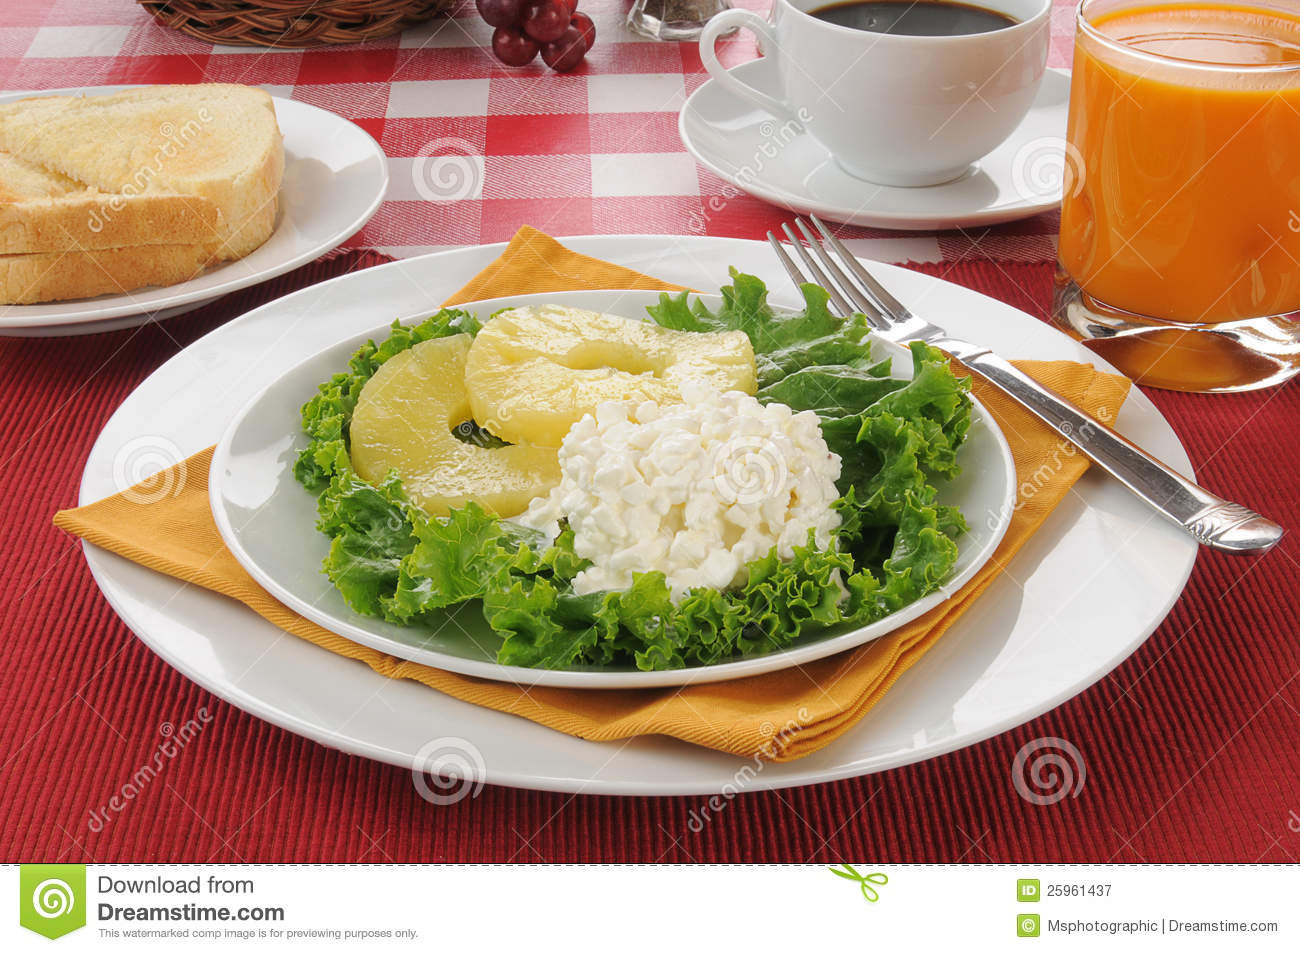 Breakfast Ideas Healthy Low Calories Diets
 Healthy Low Calorie Diet Breakfast Stock Image Image of